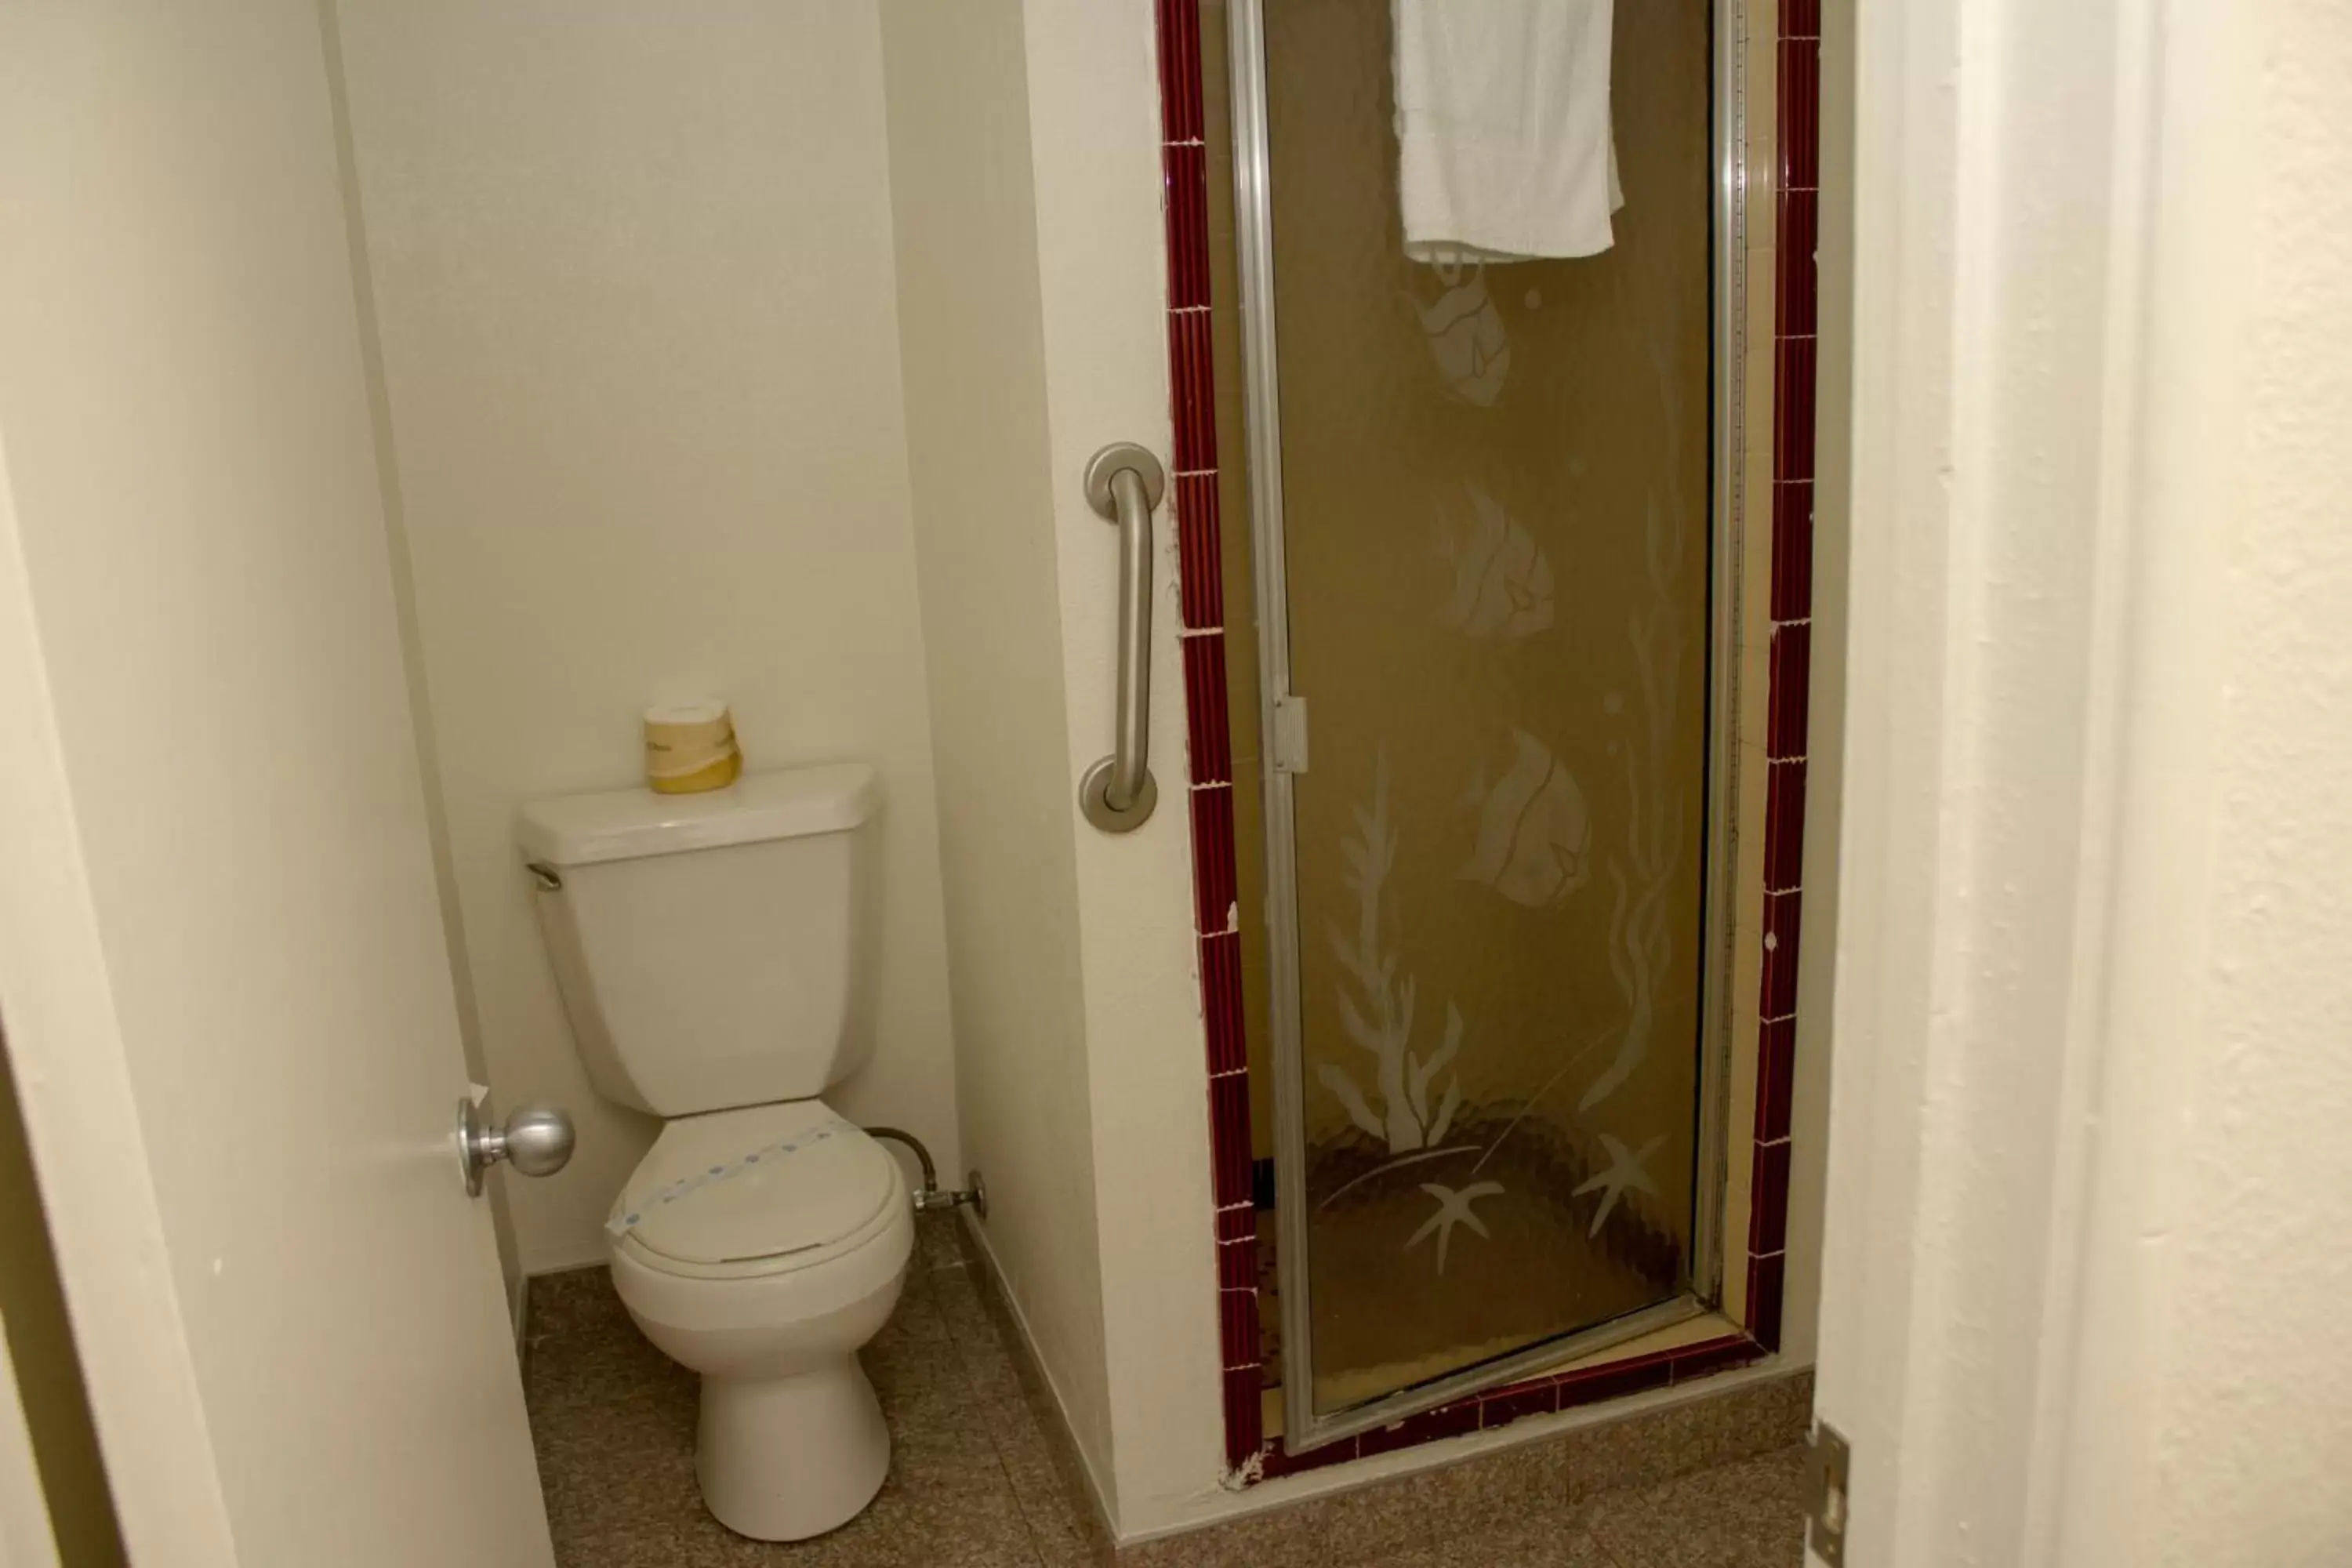 Bathroom in King's Rest Motel